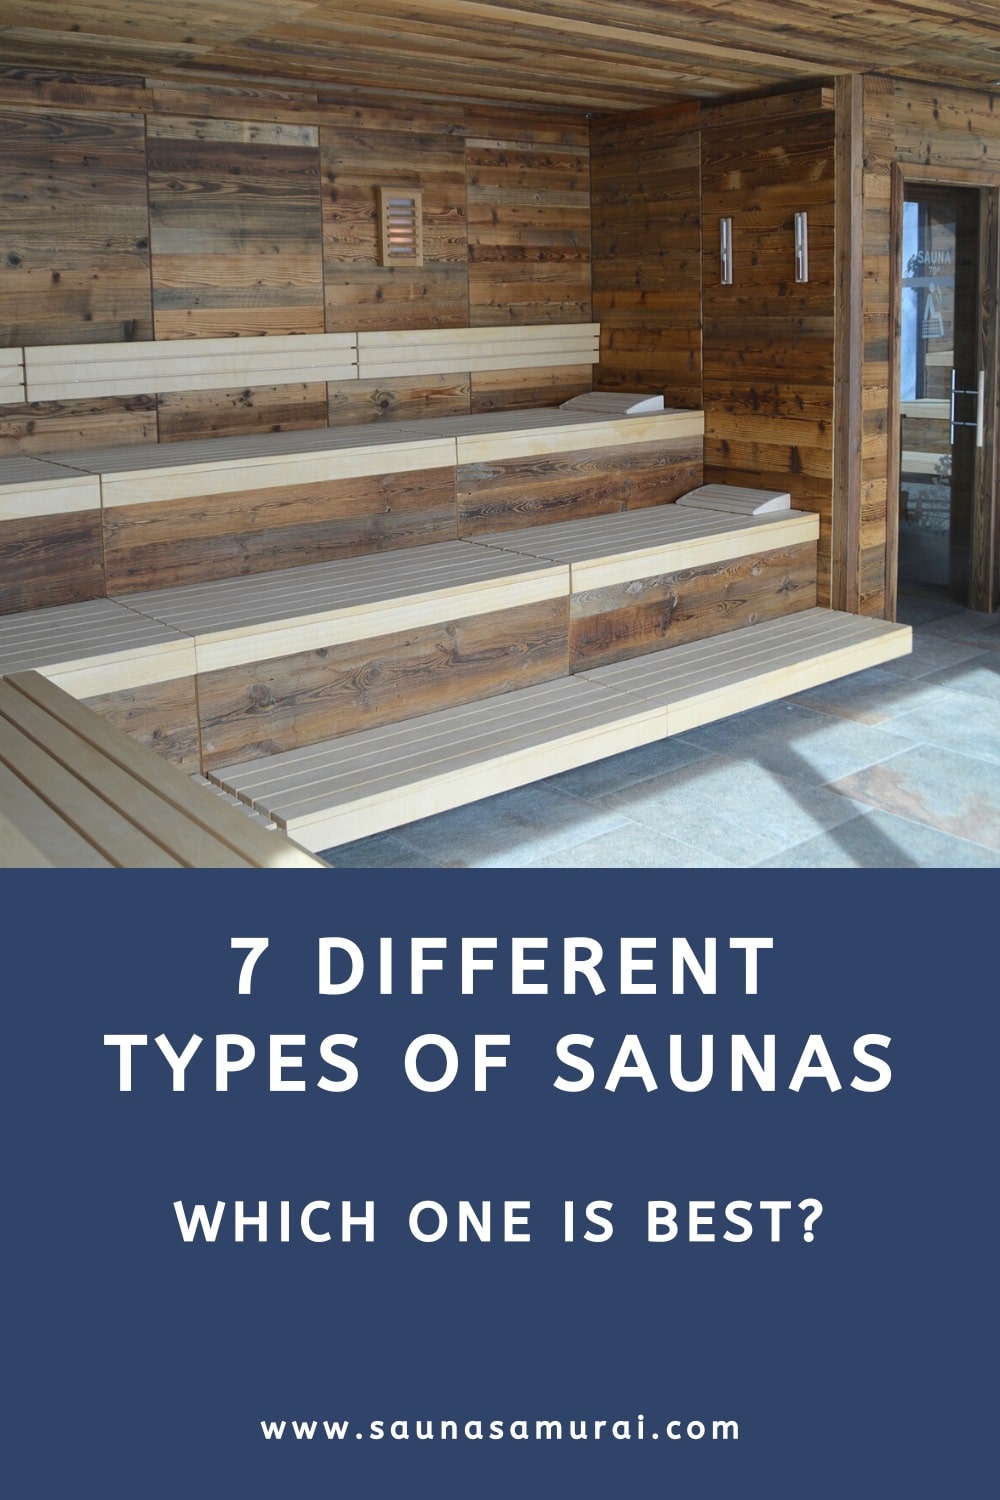 7 Different types of saunas